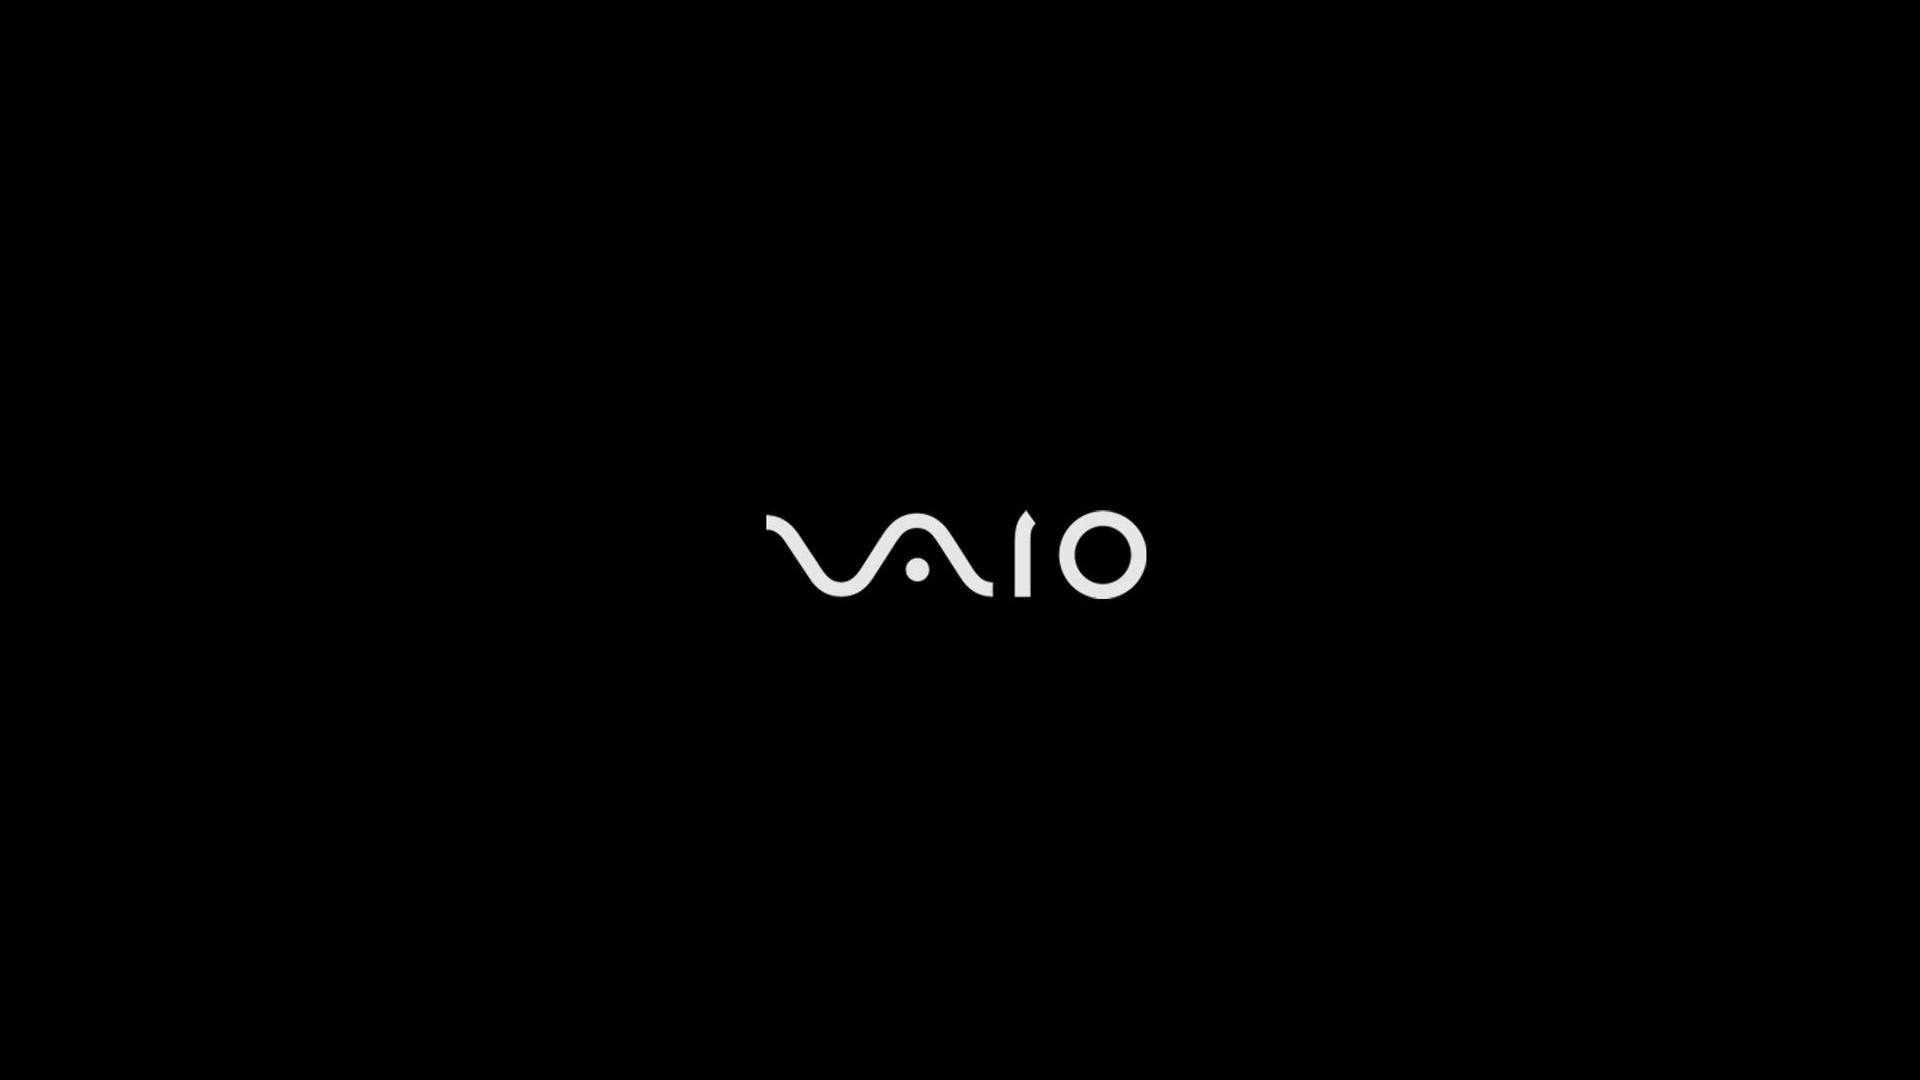 Vaio Black for 1920 x 1080 HDTV 1080p resolution